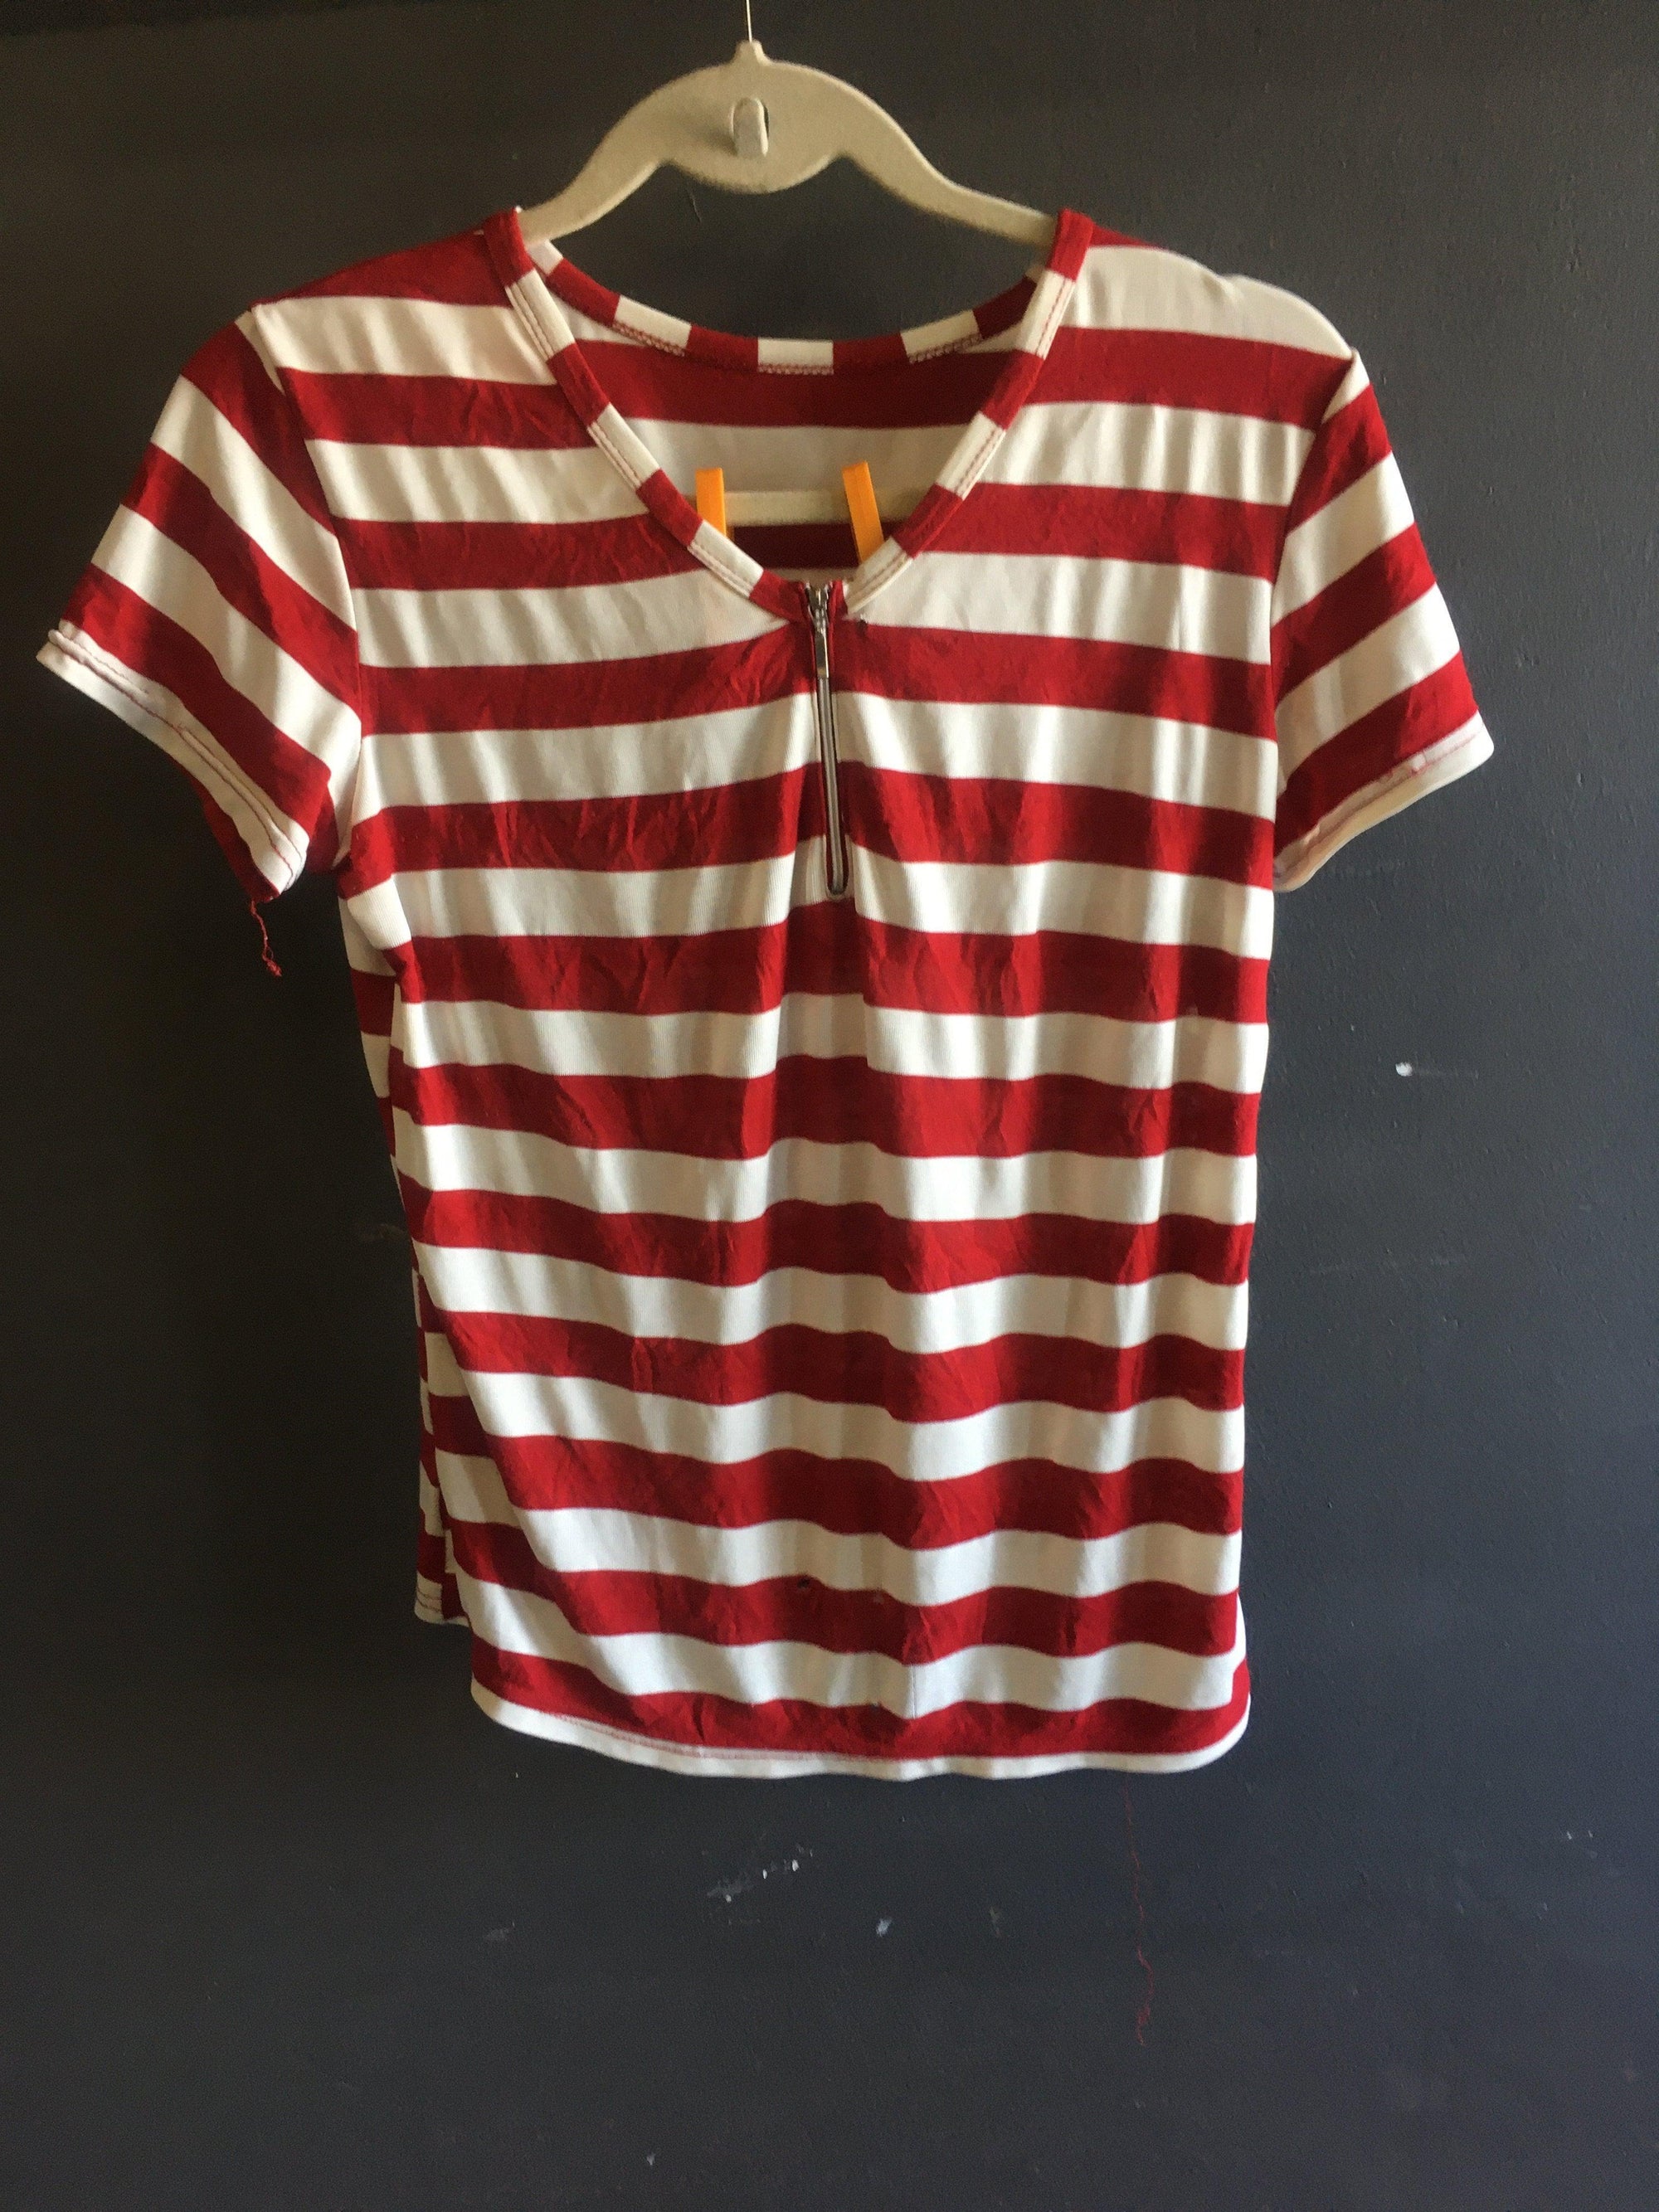 Red Striped T Shirt - 2ndhandwarehouse.com